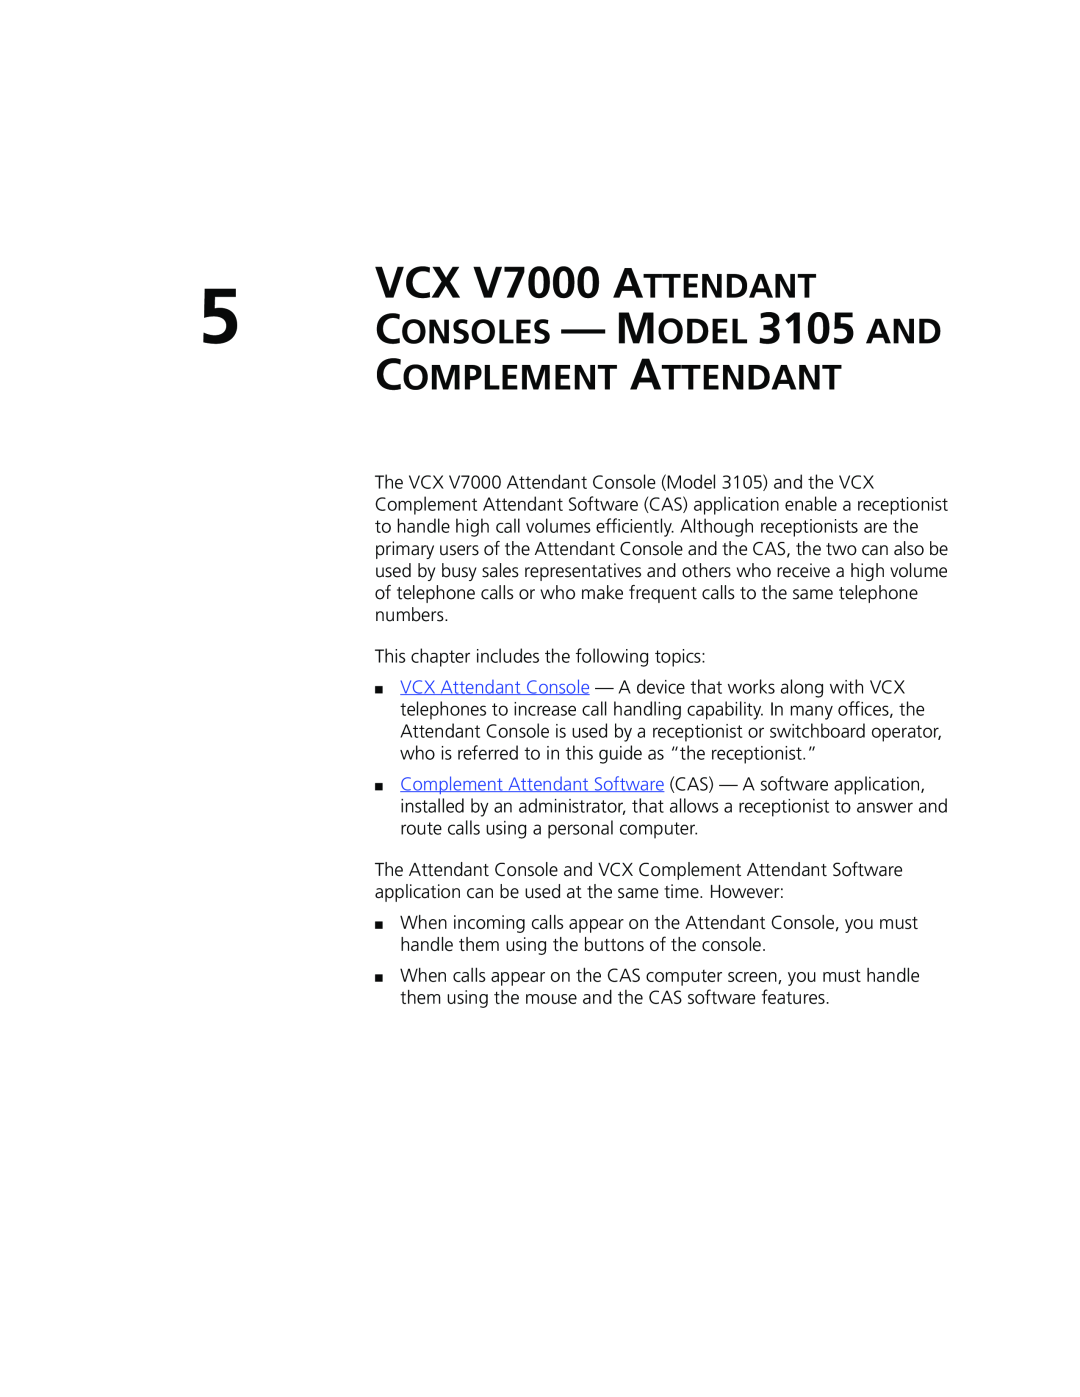 3Com manual VCX V7000 ATTENDANT, Complement Attendant, CONSOLES - MODEL 3105 AND 